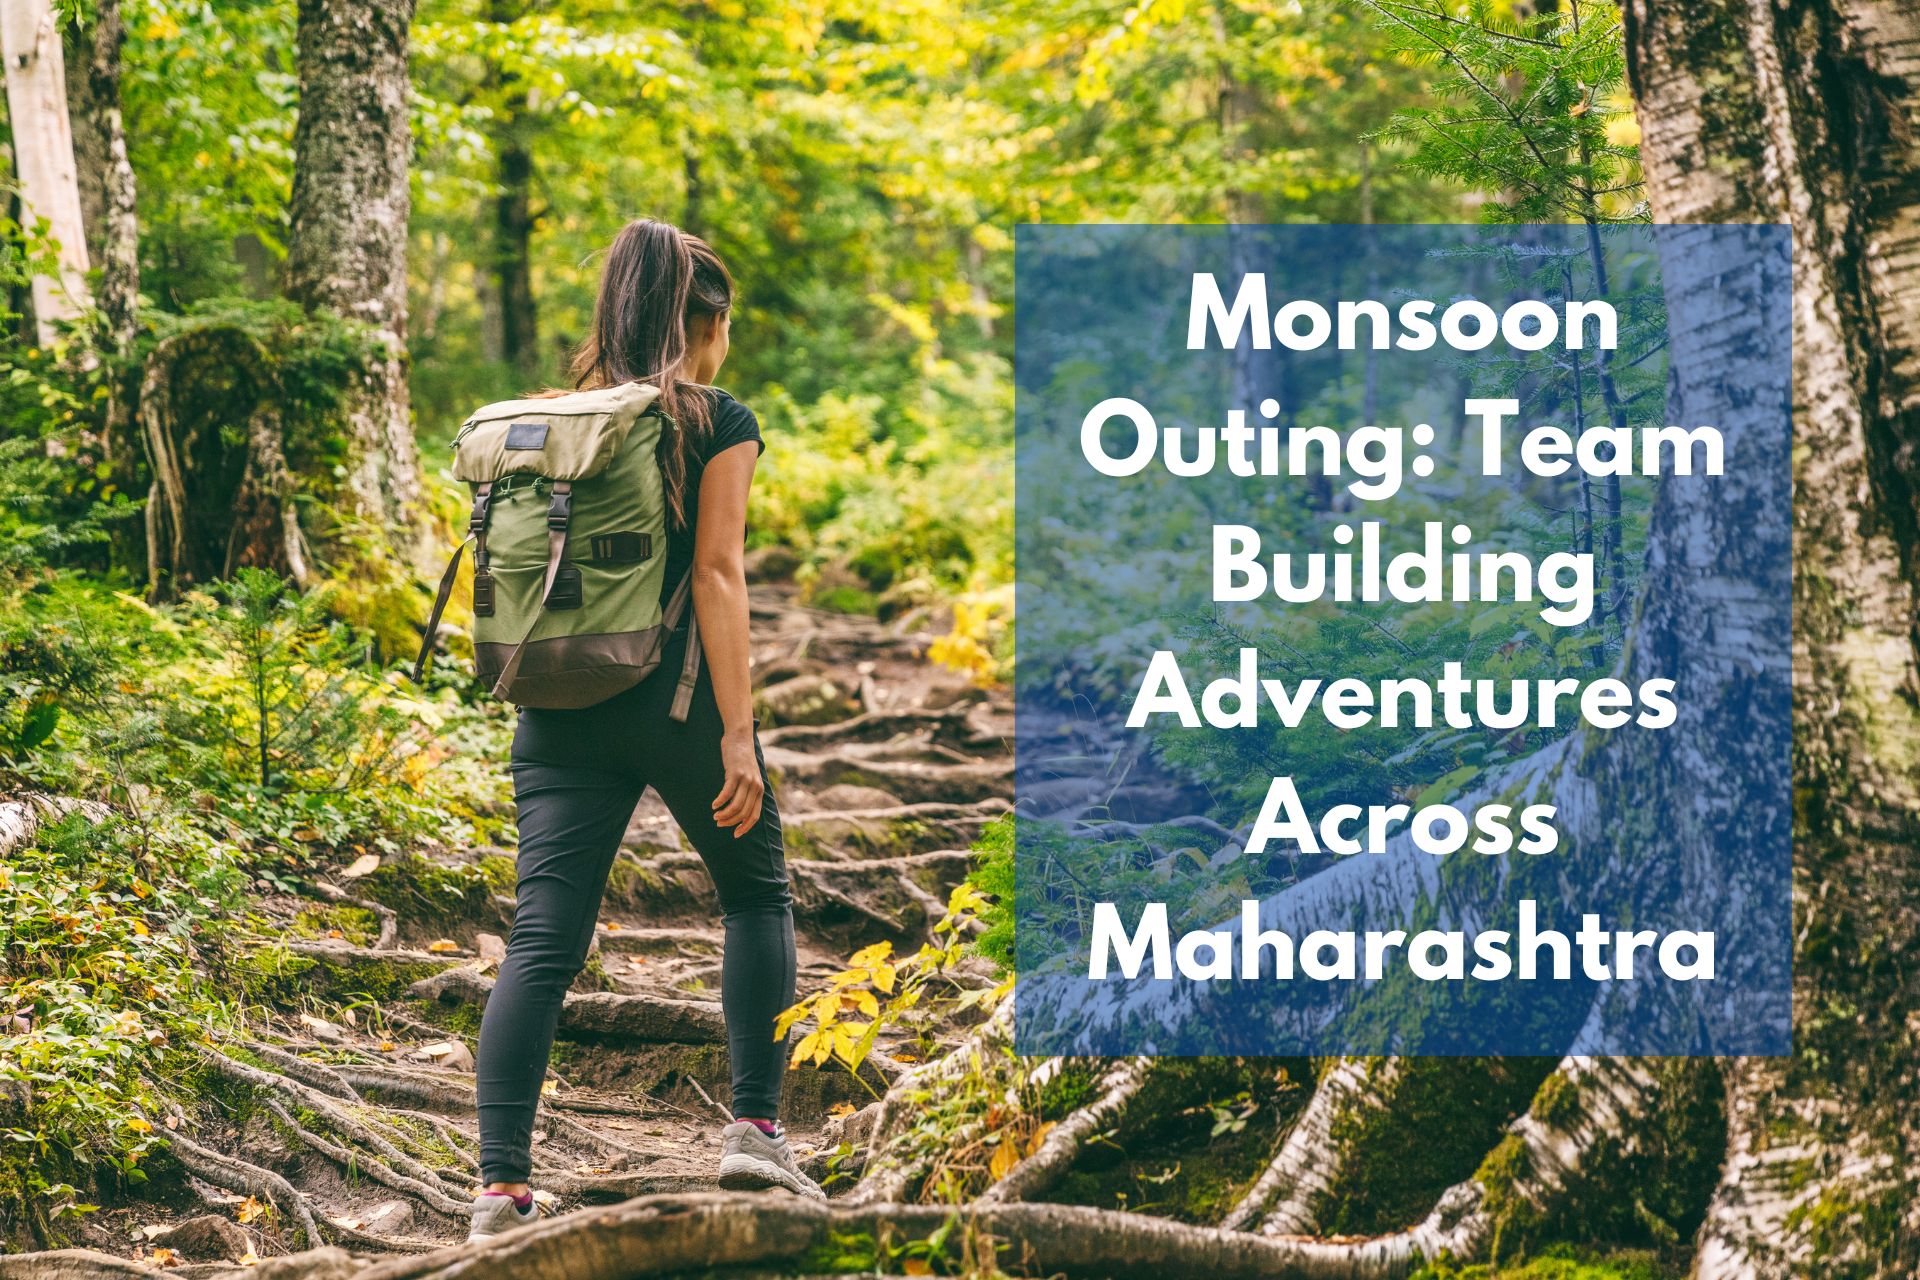 Monsoon Outing Team Building Adventures Across Maharashtra (1)